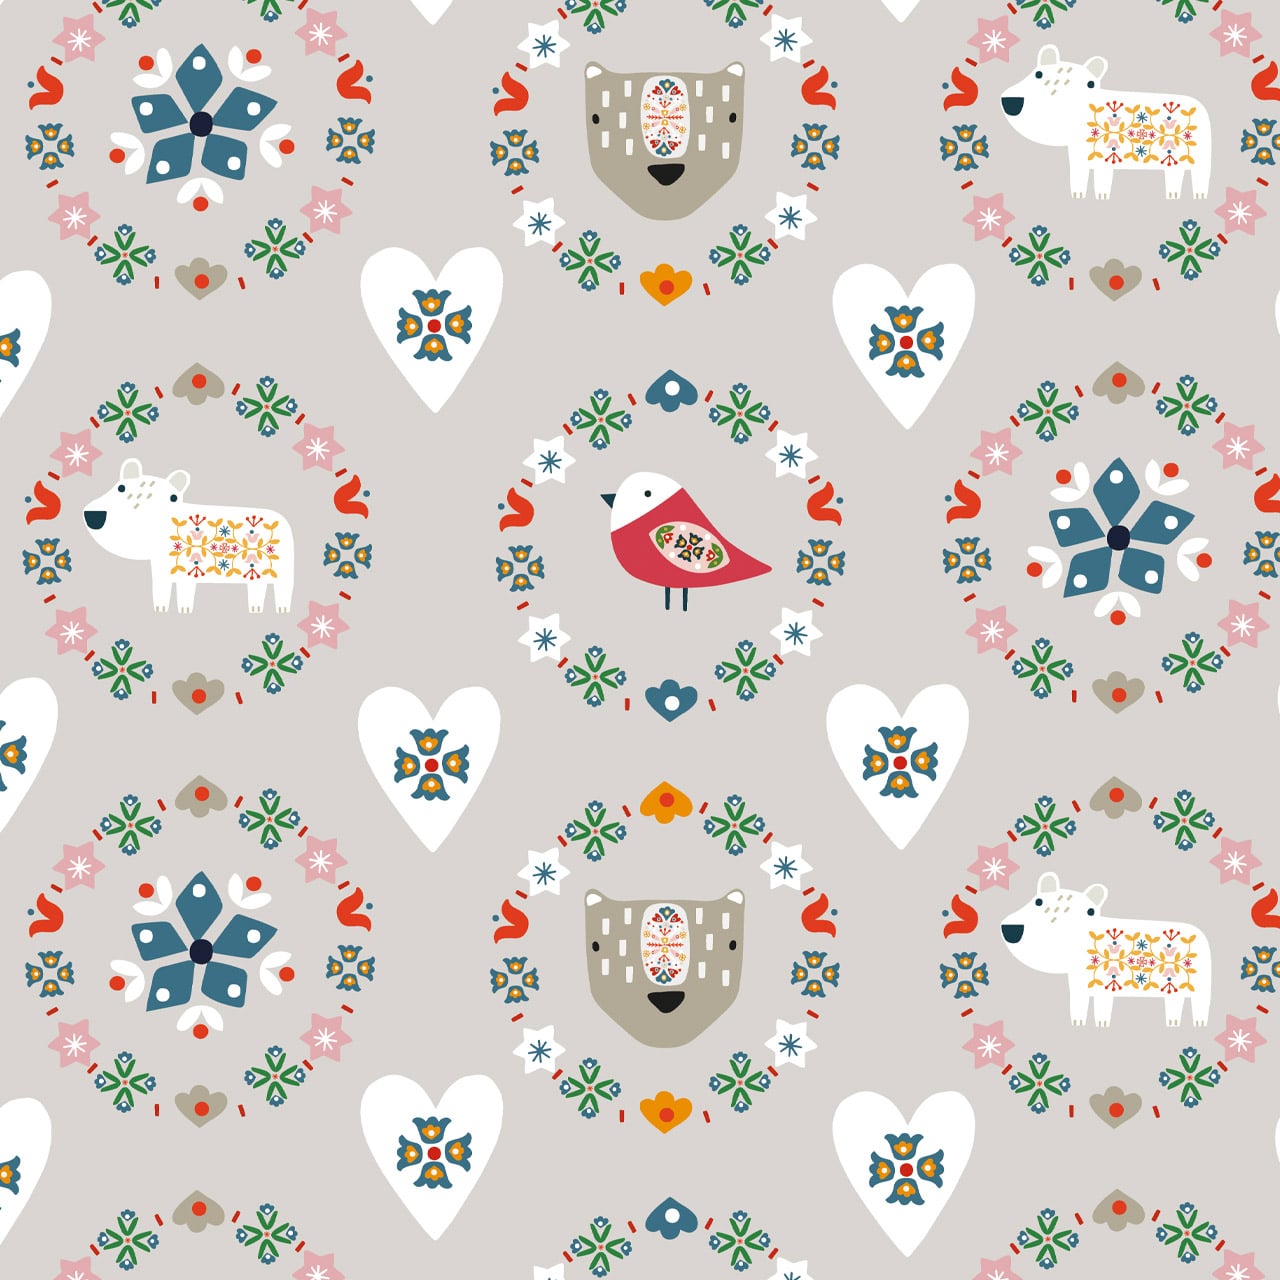 Scandi birds, flowers and animals on a grey cotton fabric - Winter Folk by Dashwood Studio